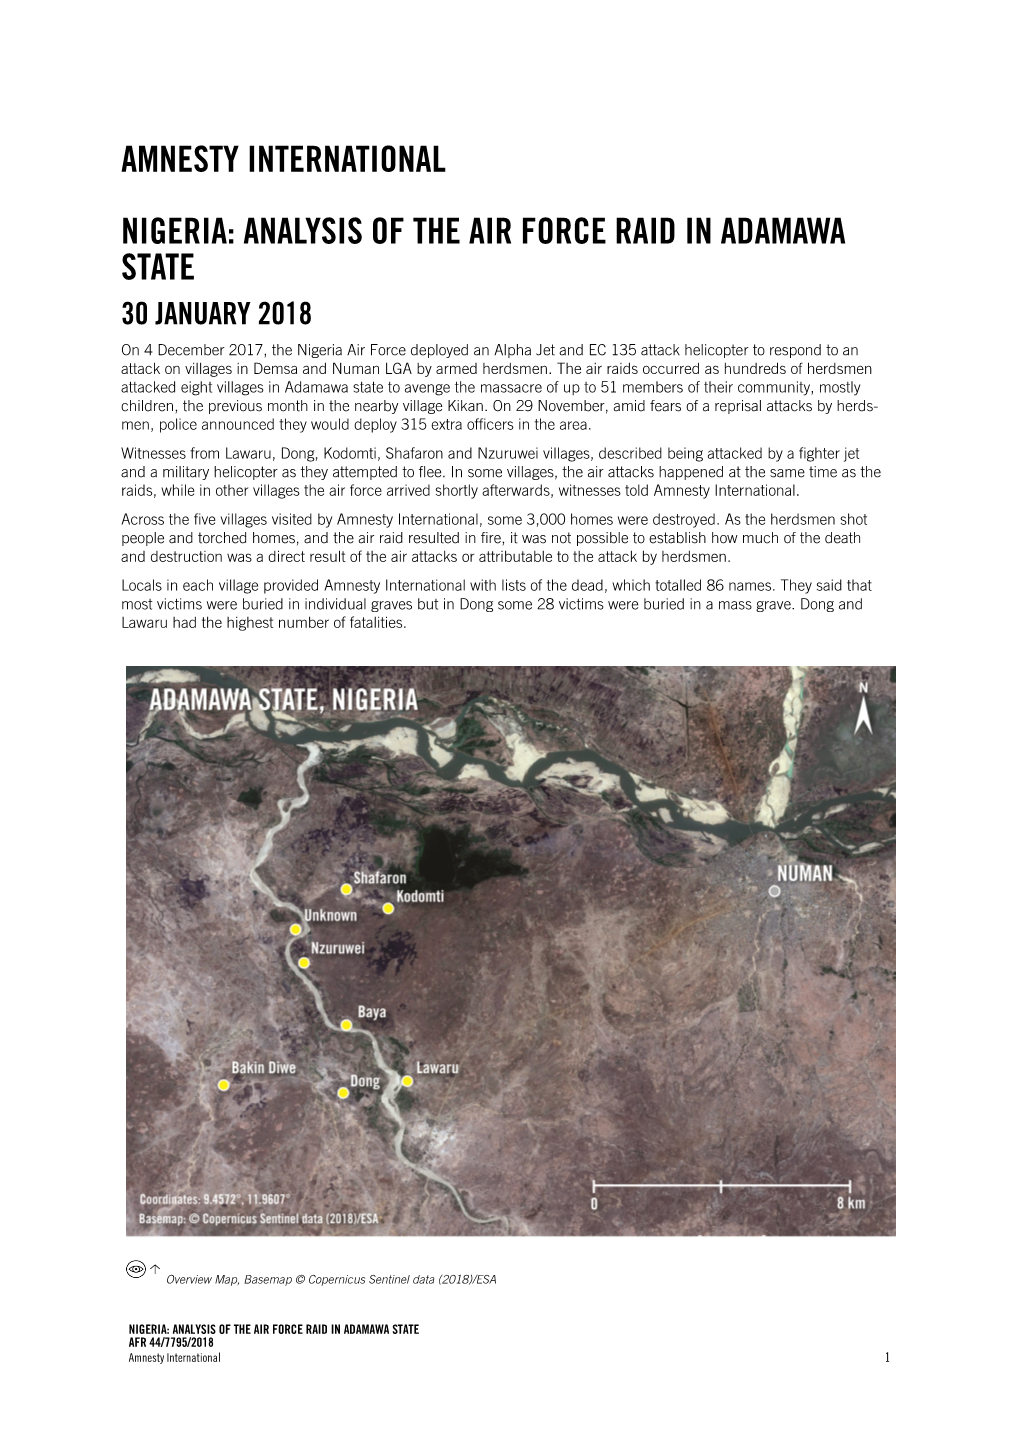 Amnesty International Nigeria: Analysis of the Air Force Raid in Adamawa State